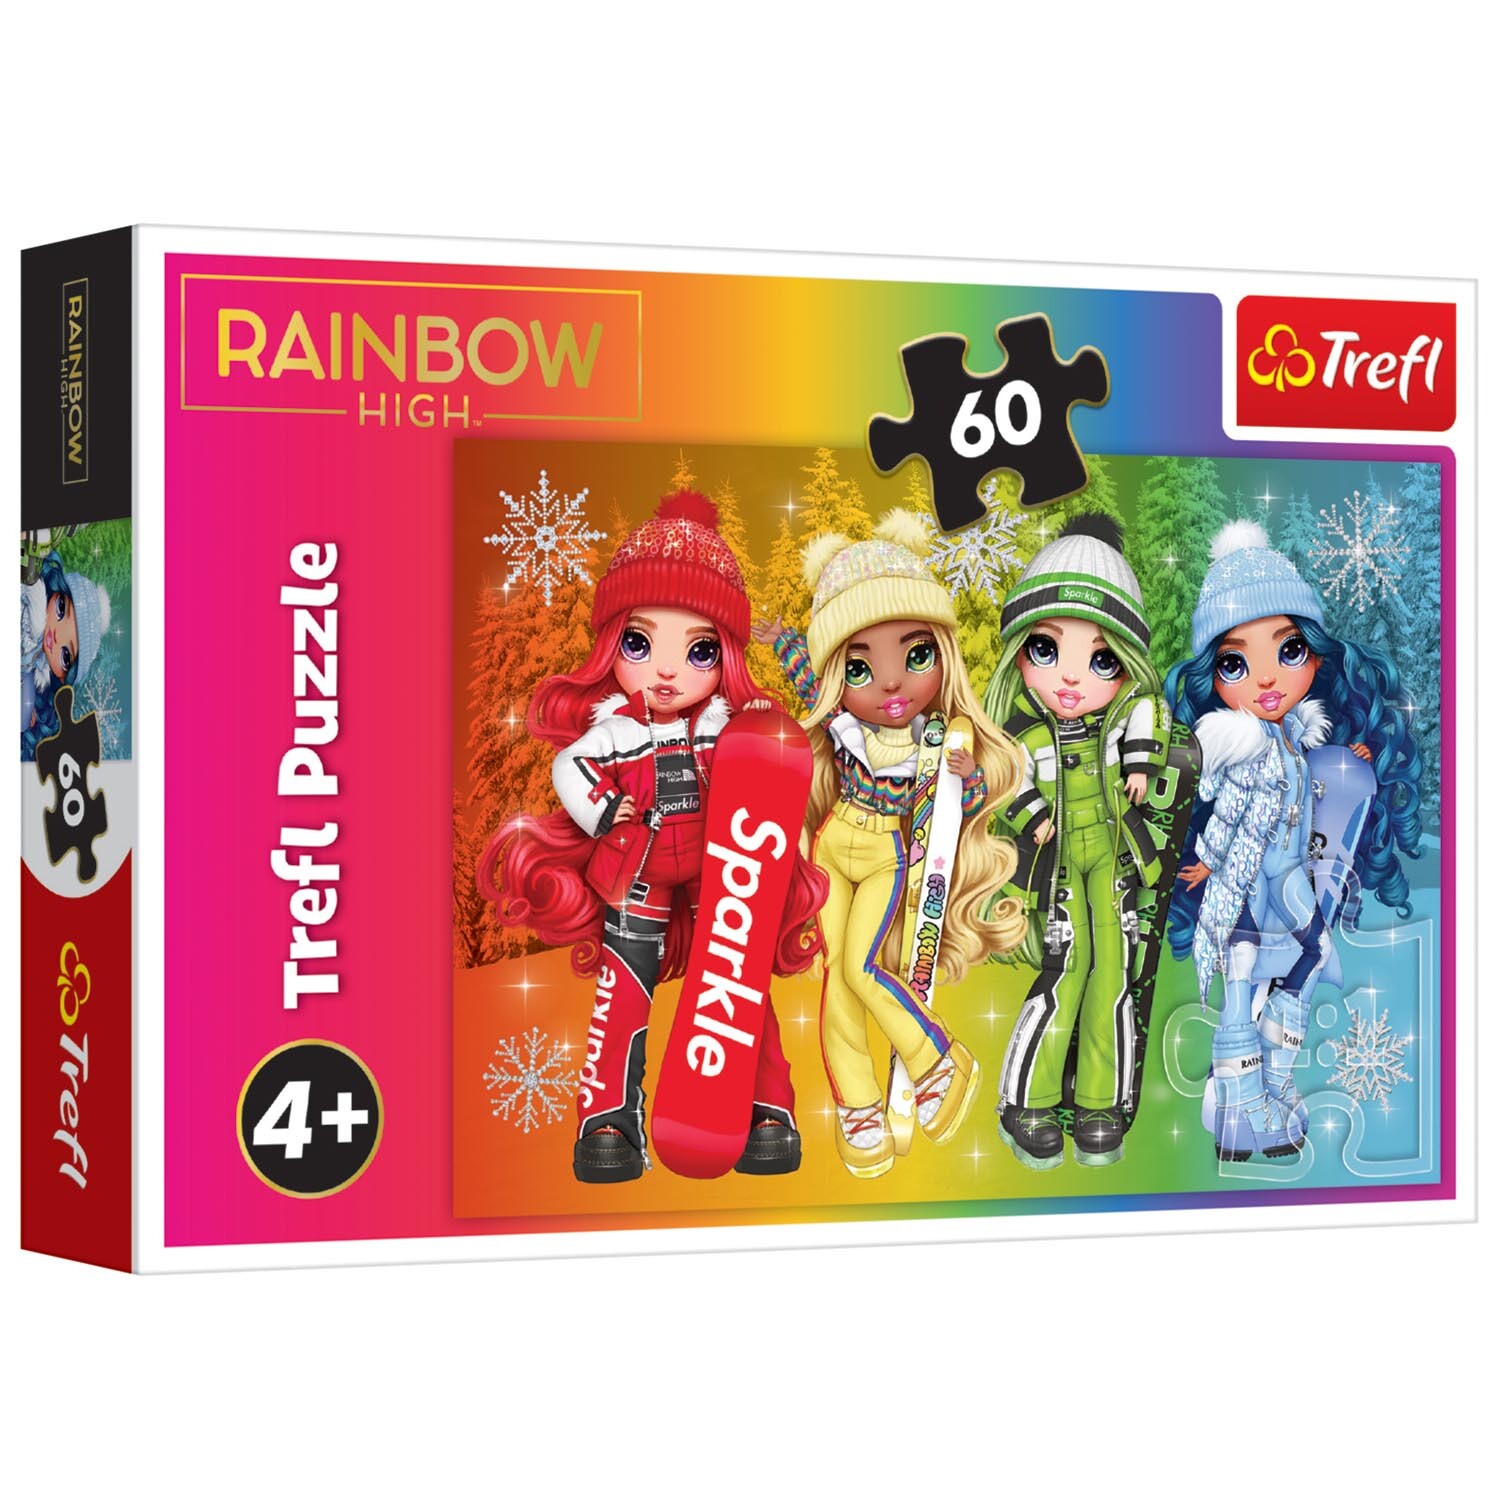 TREFL Rainbow High Joyful Dolls Puzzle 60 Piece Image